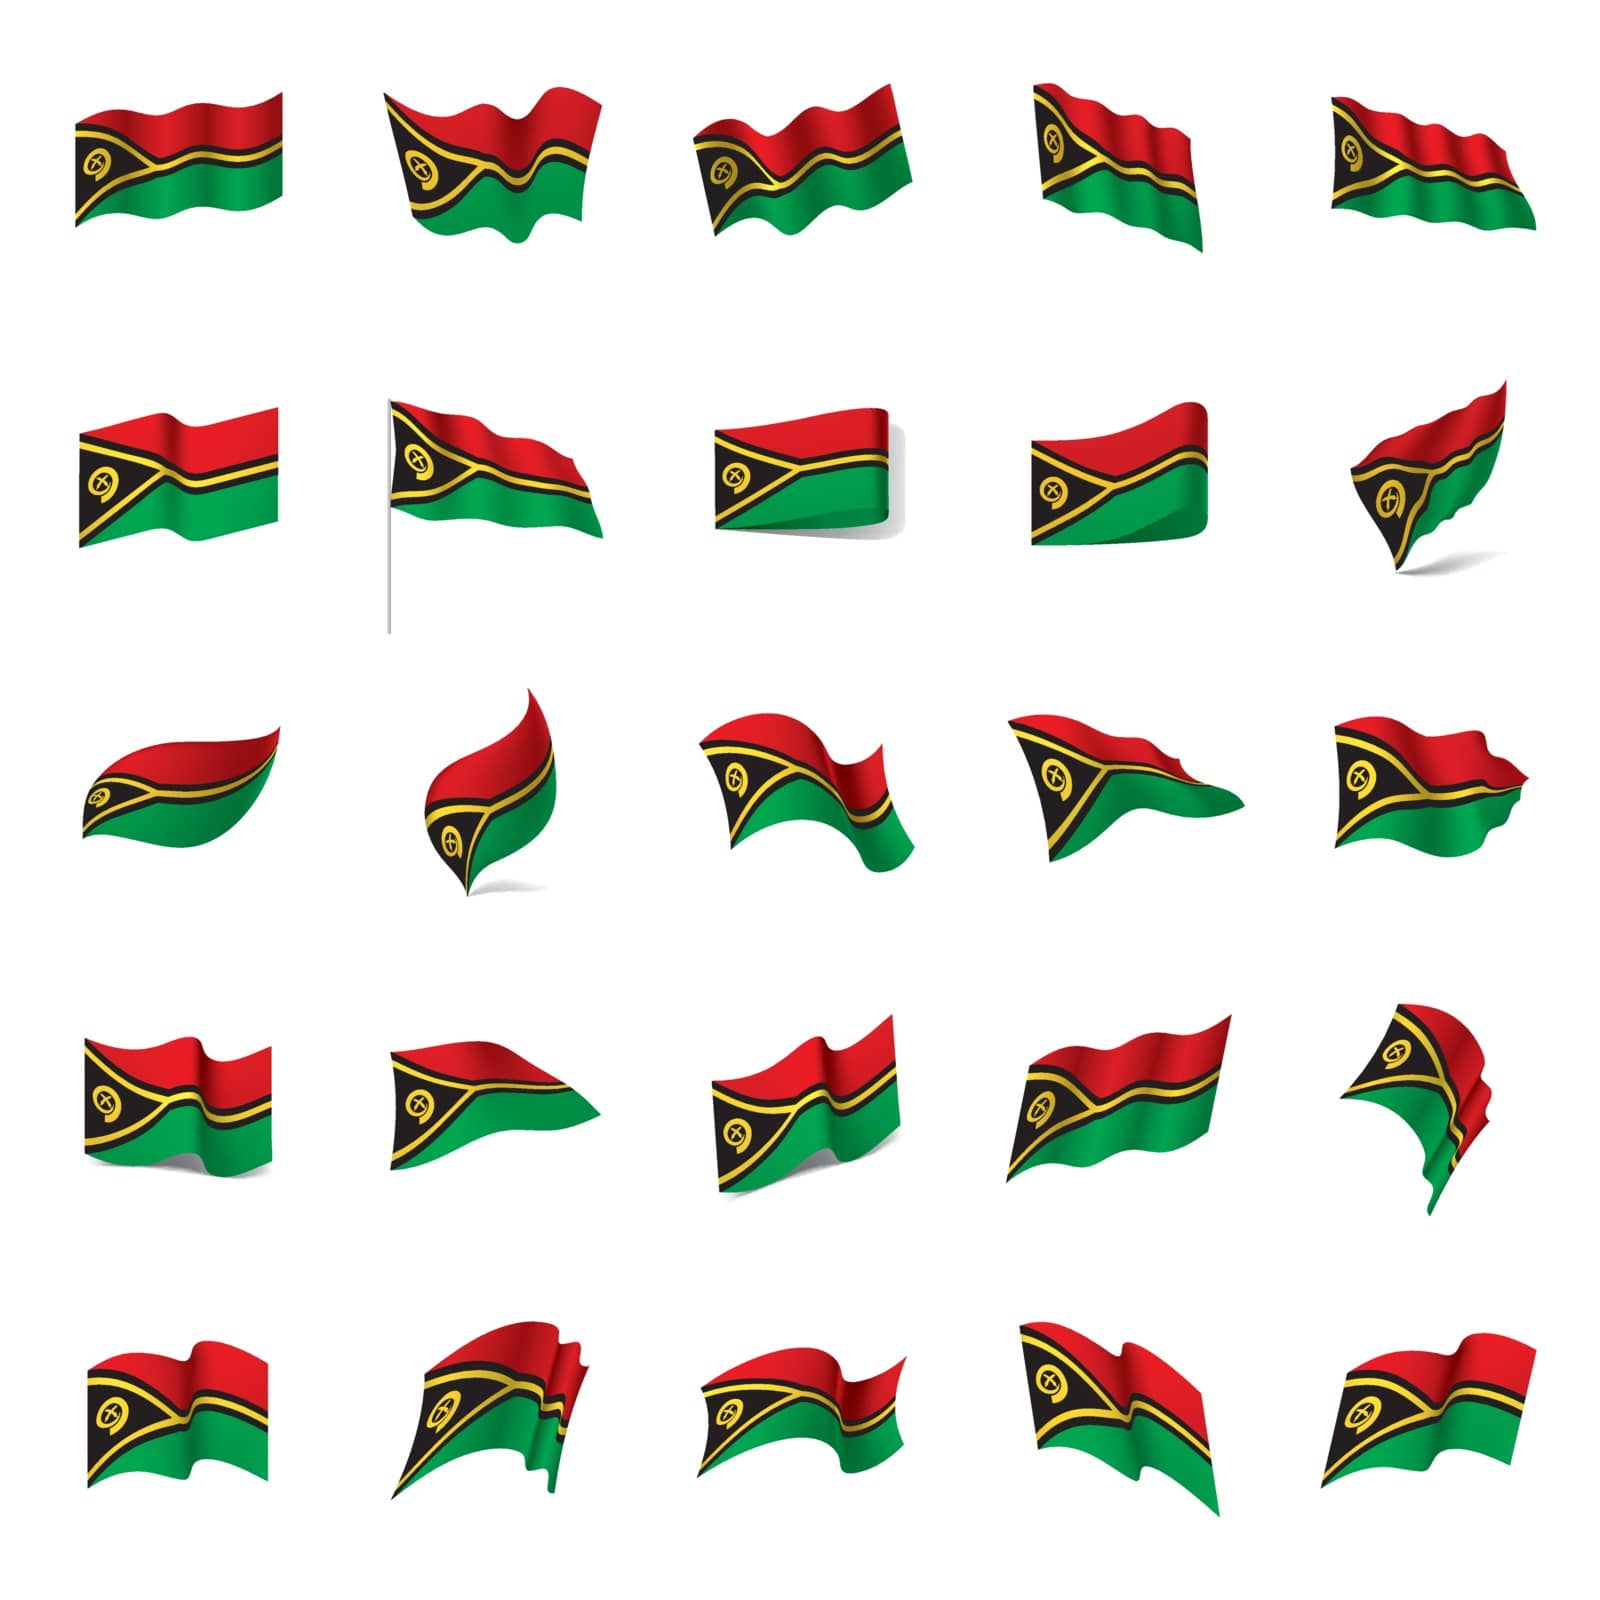 Vanuatu flag, vector illustration by butenkow